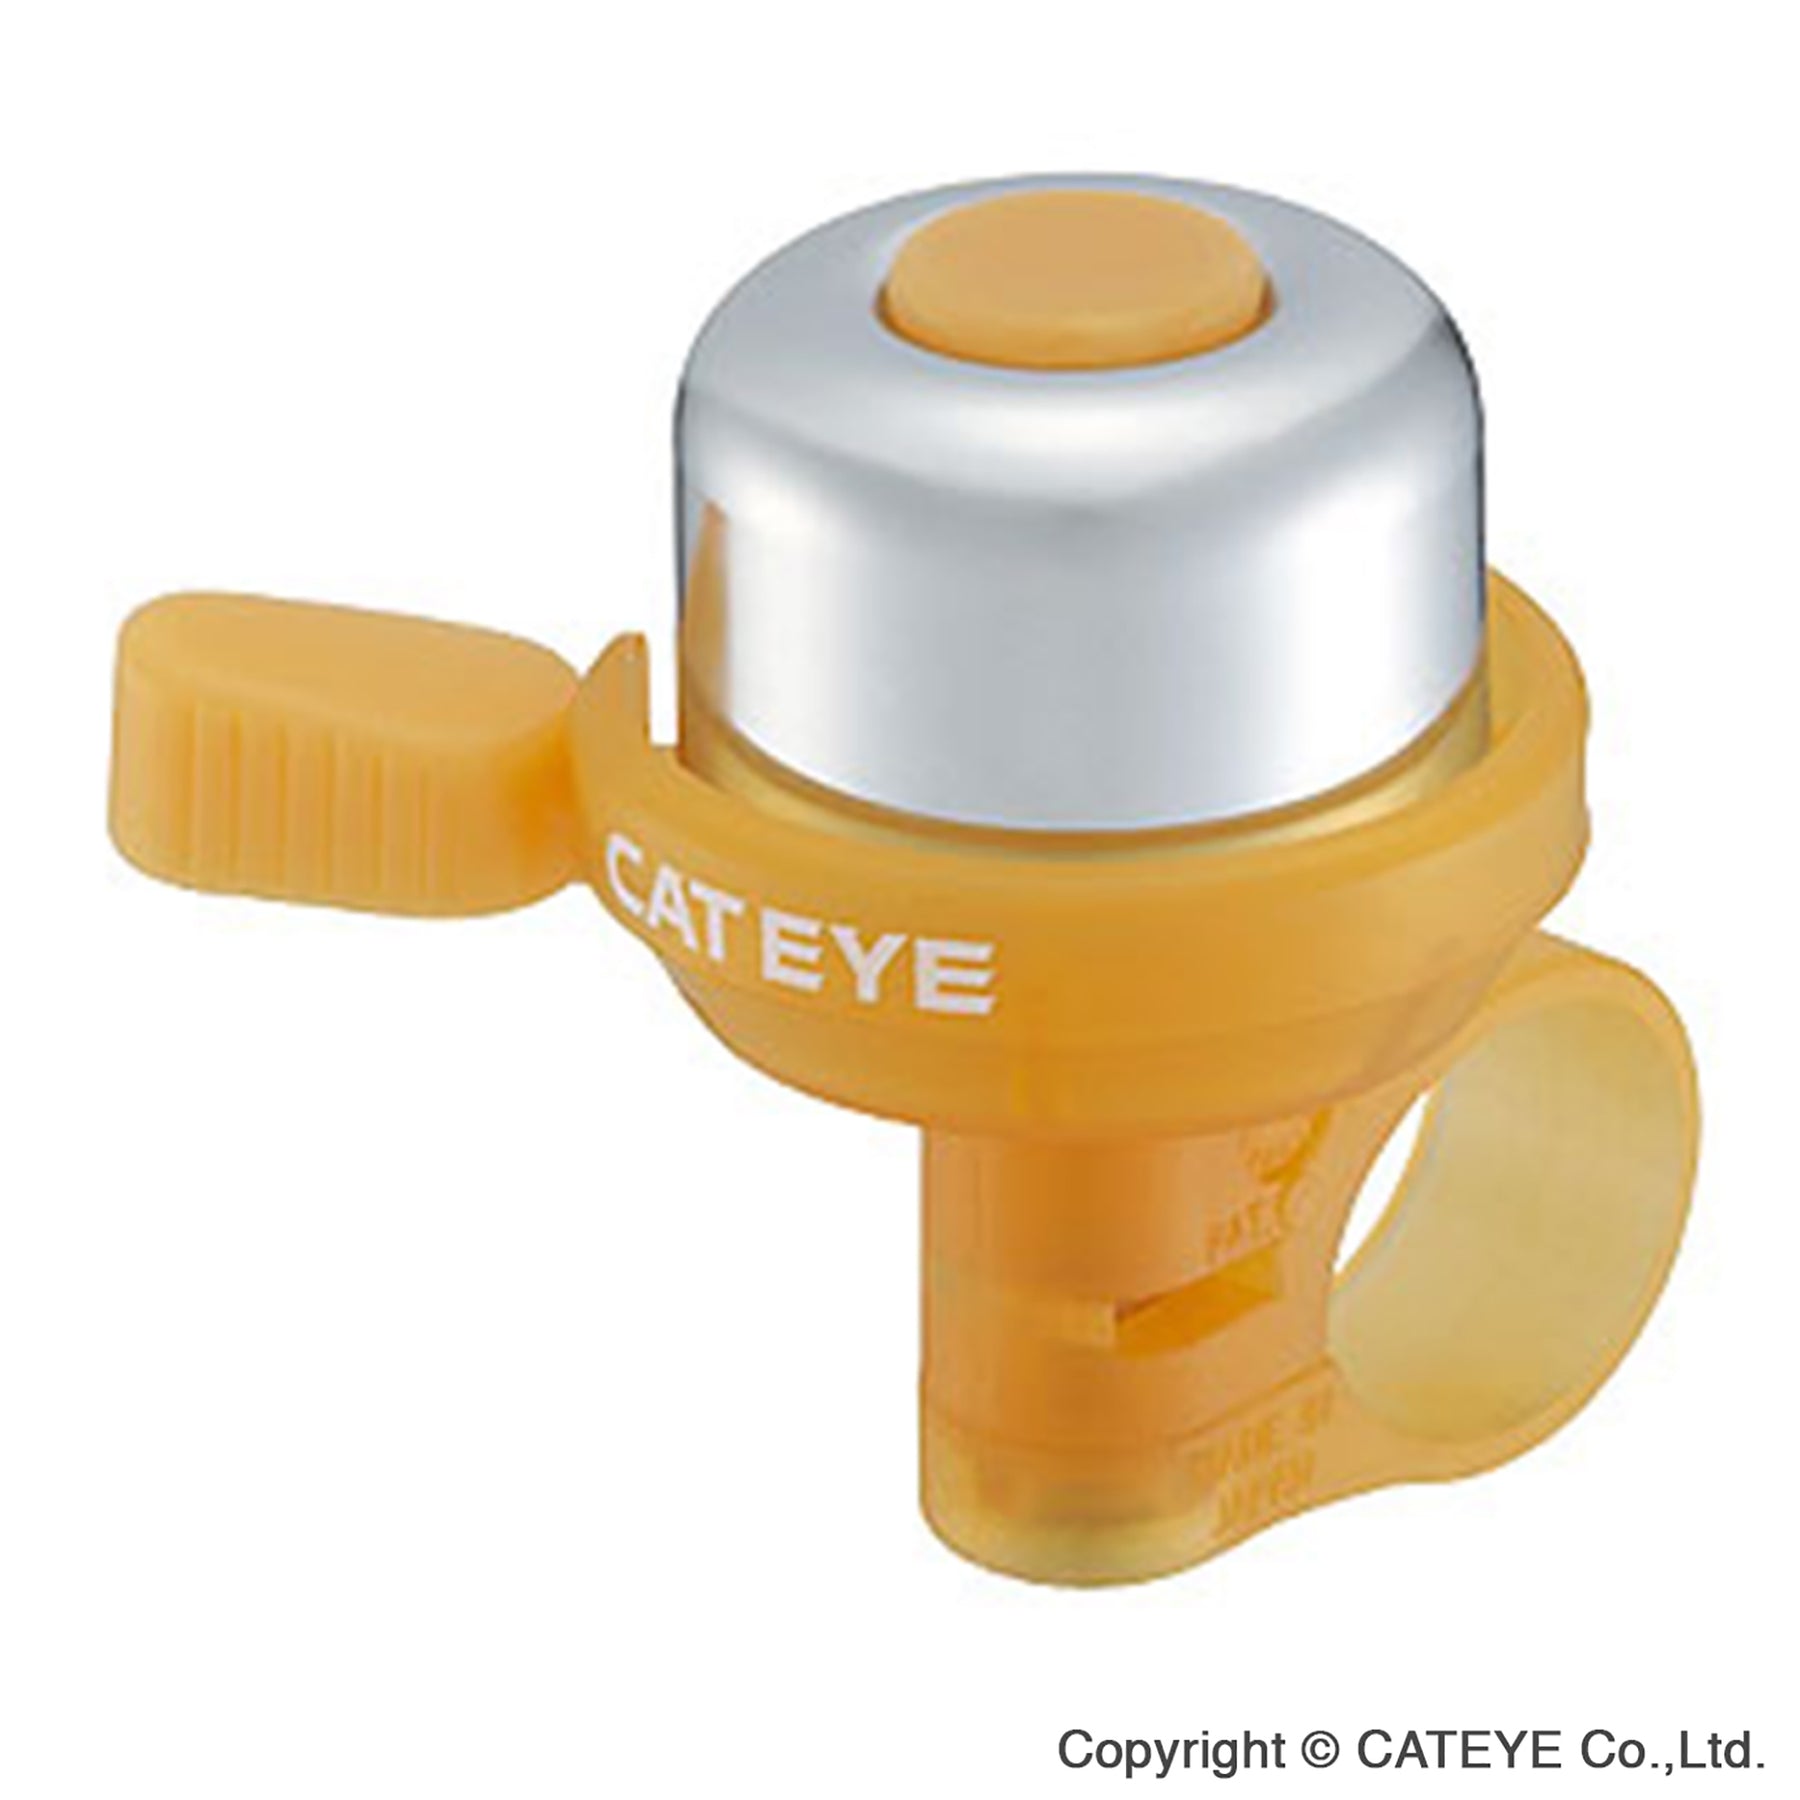 Cateye Pb-1000 Wind Brass Bell